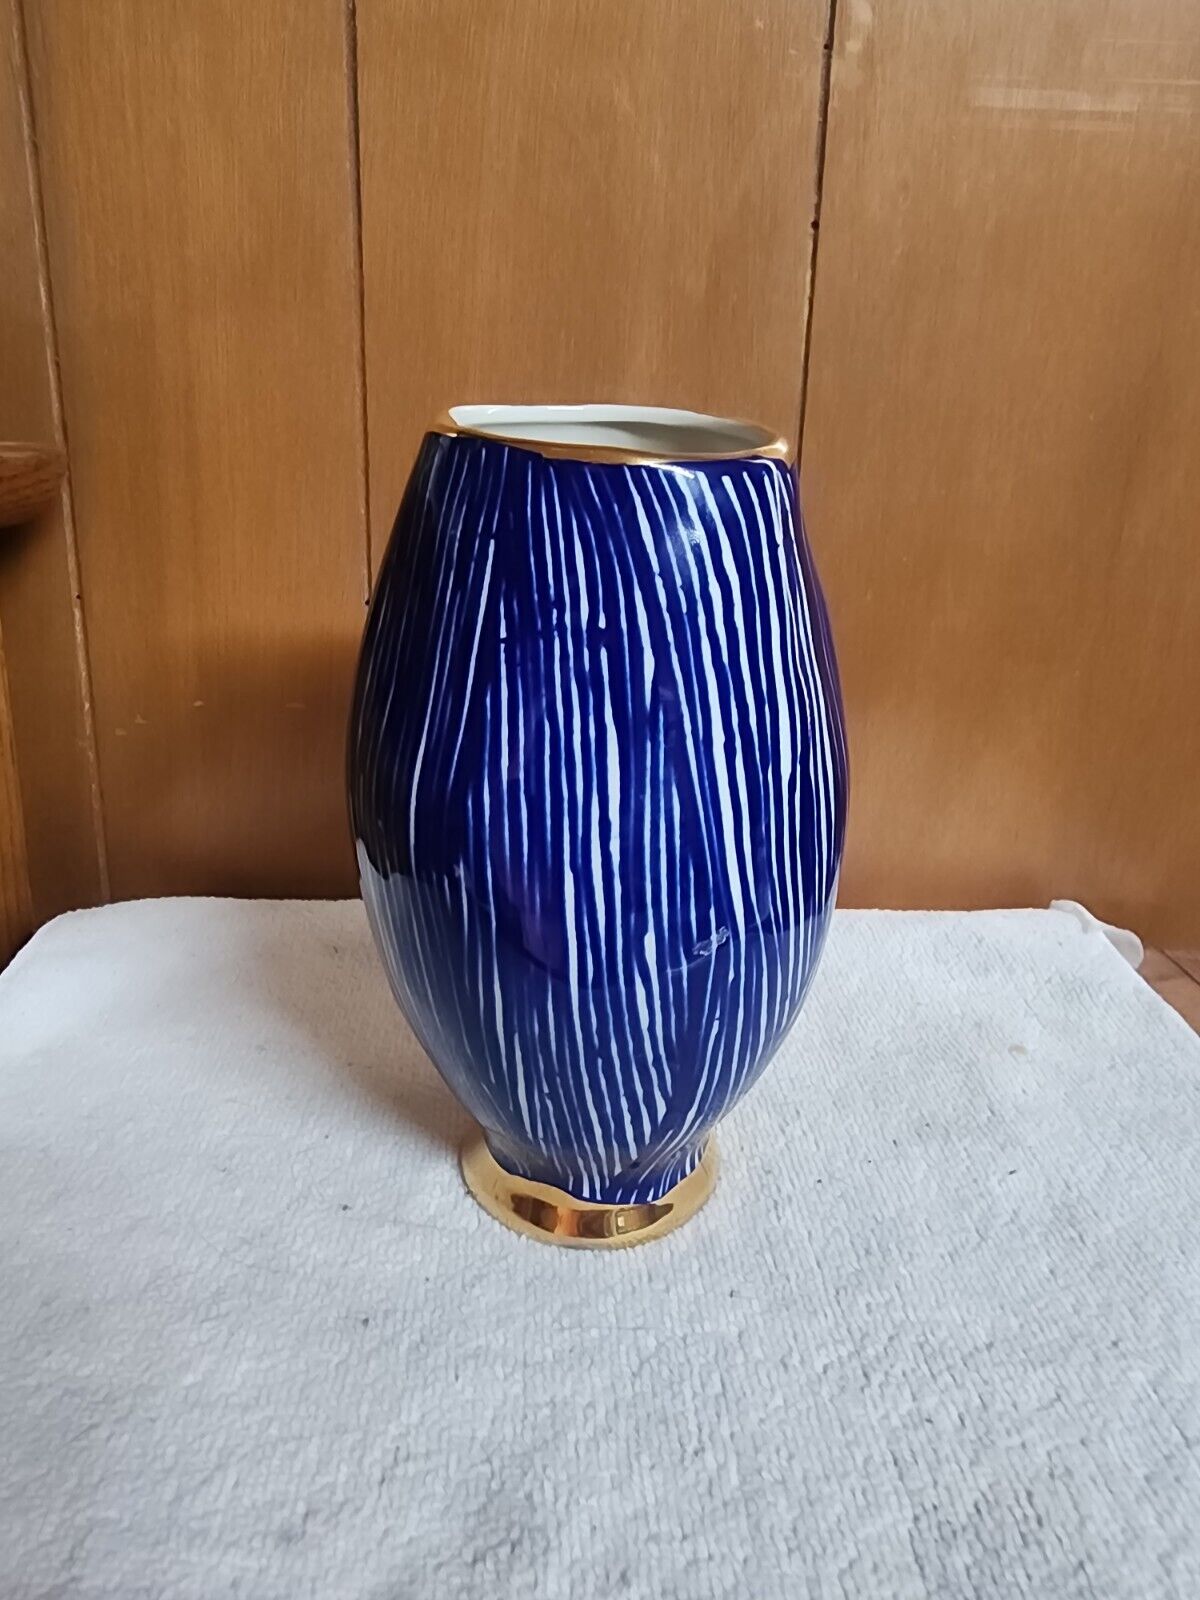 Anthropologie Ryan Hoffmann Blue Stripe Vase With Gold Trim- Signed